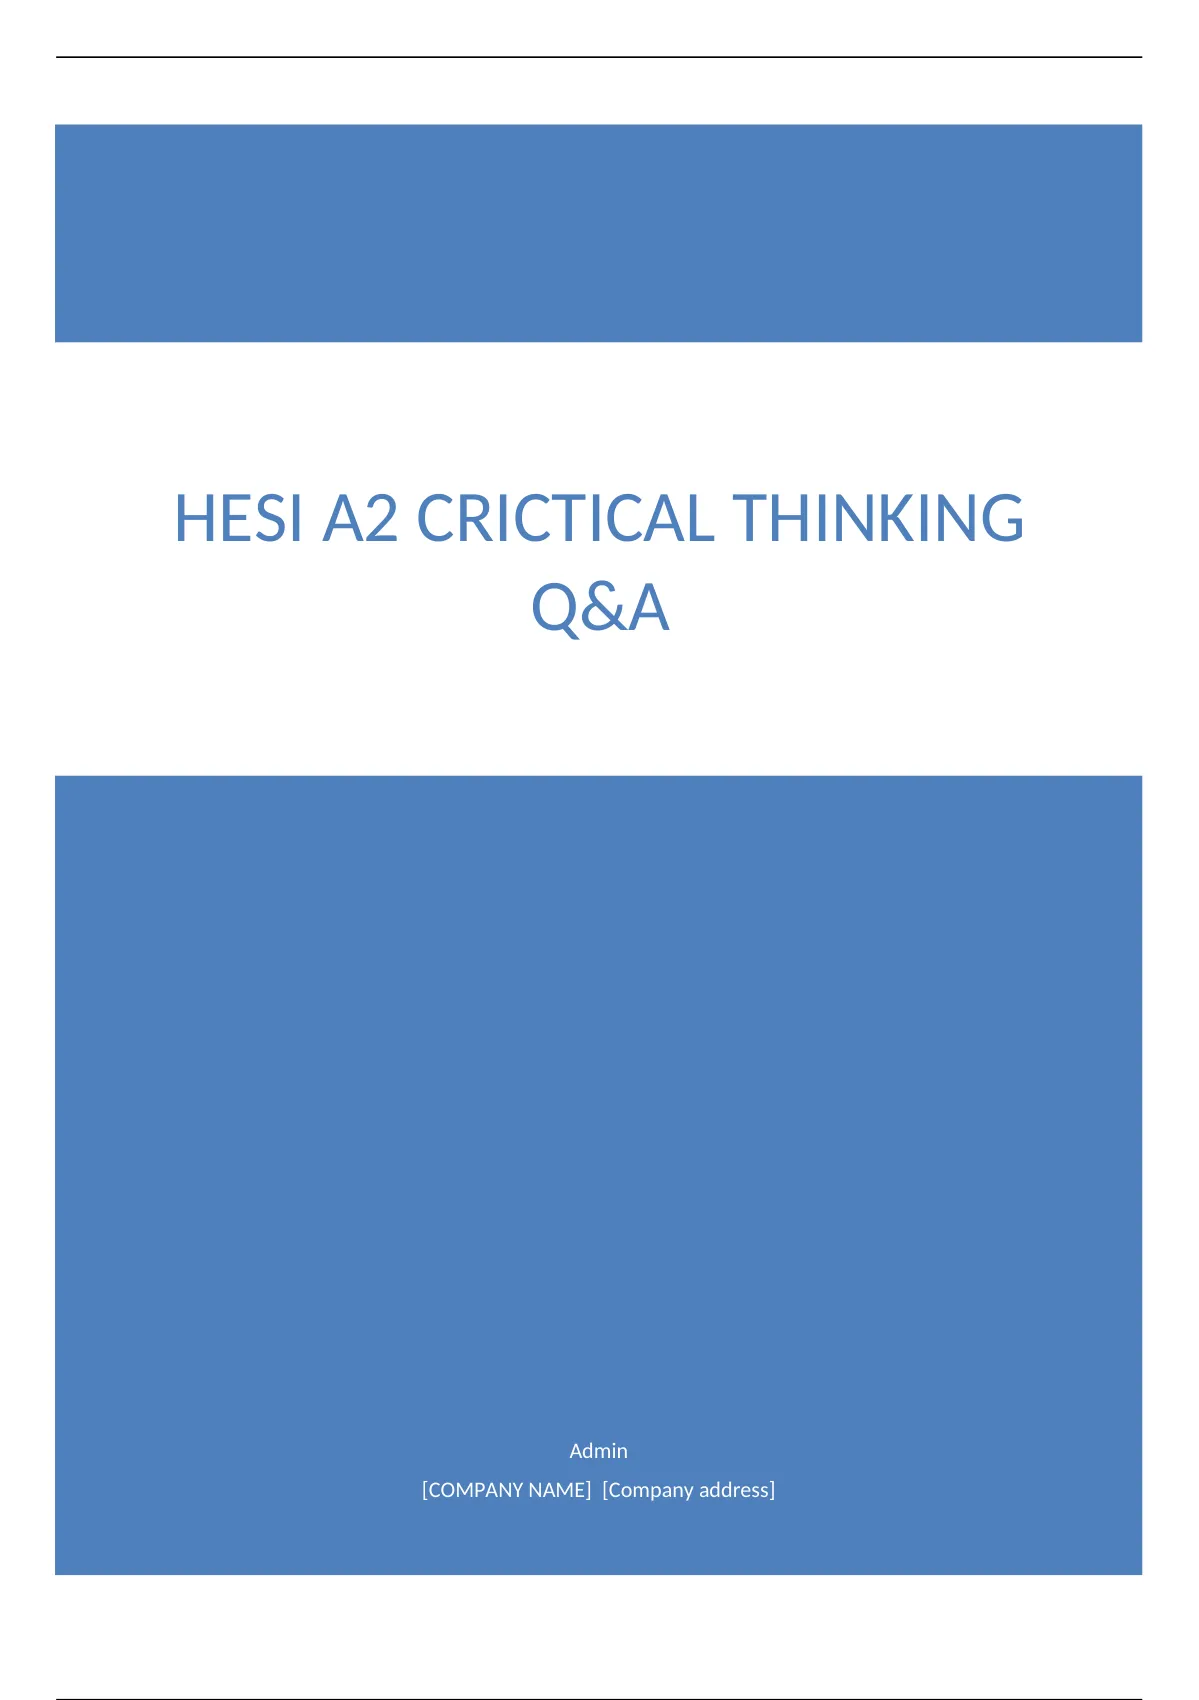 hesi critical thinking 2021